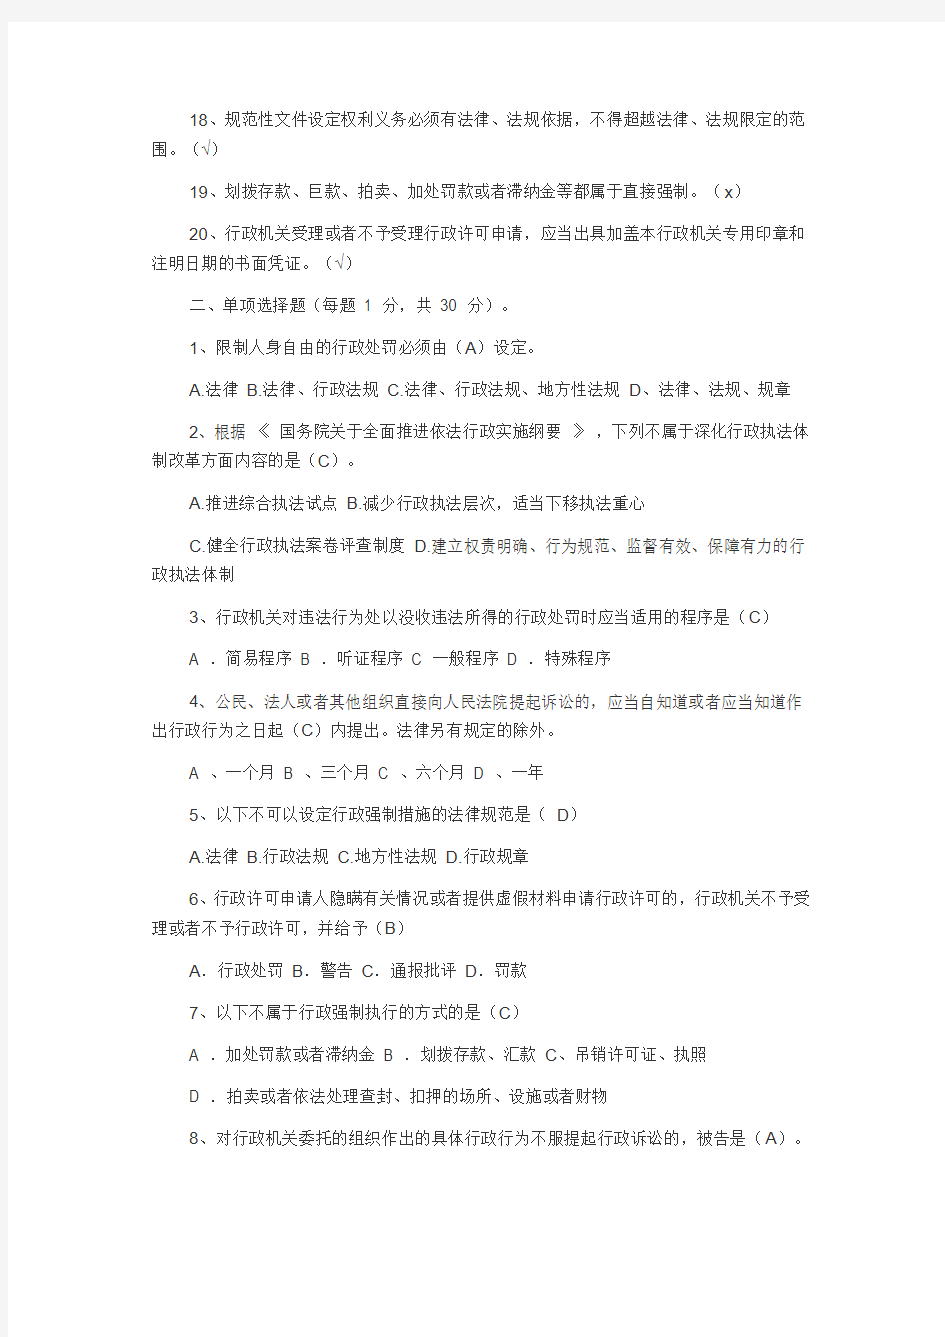 A2015年福建省行政执法资格考试题库汇编